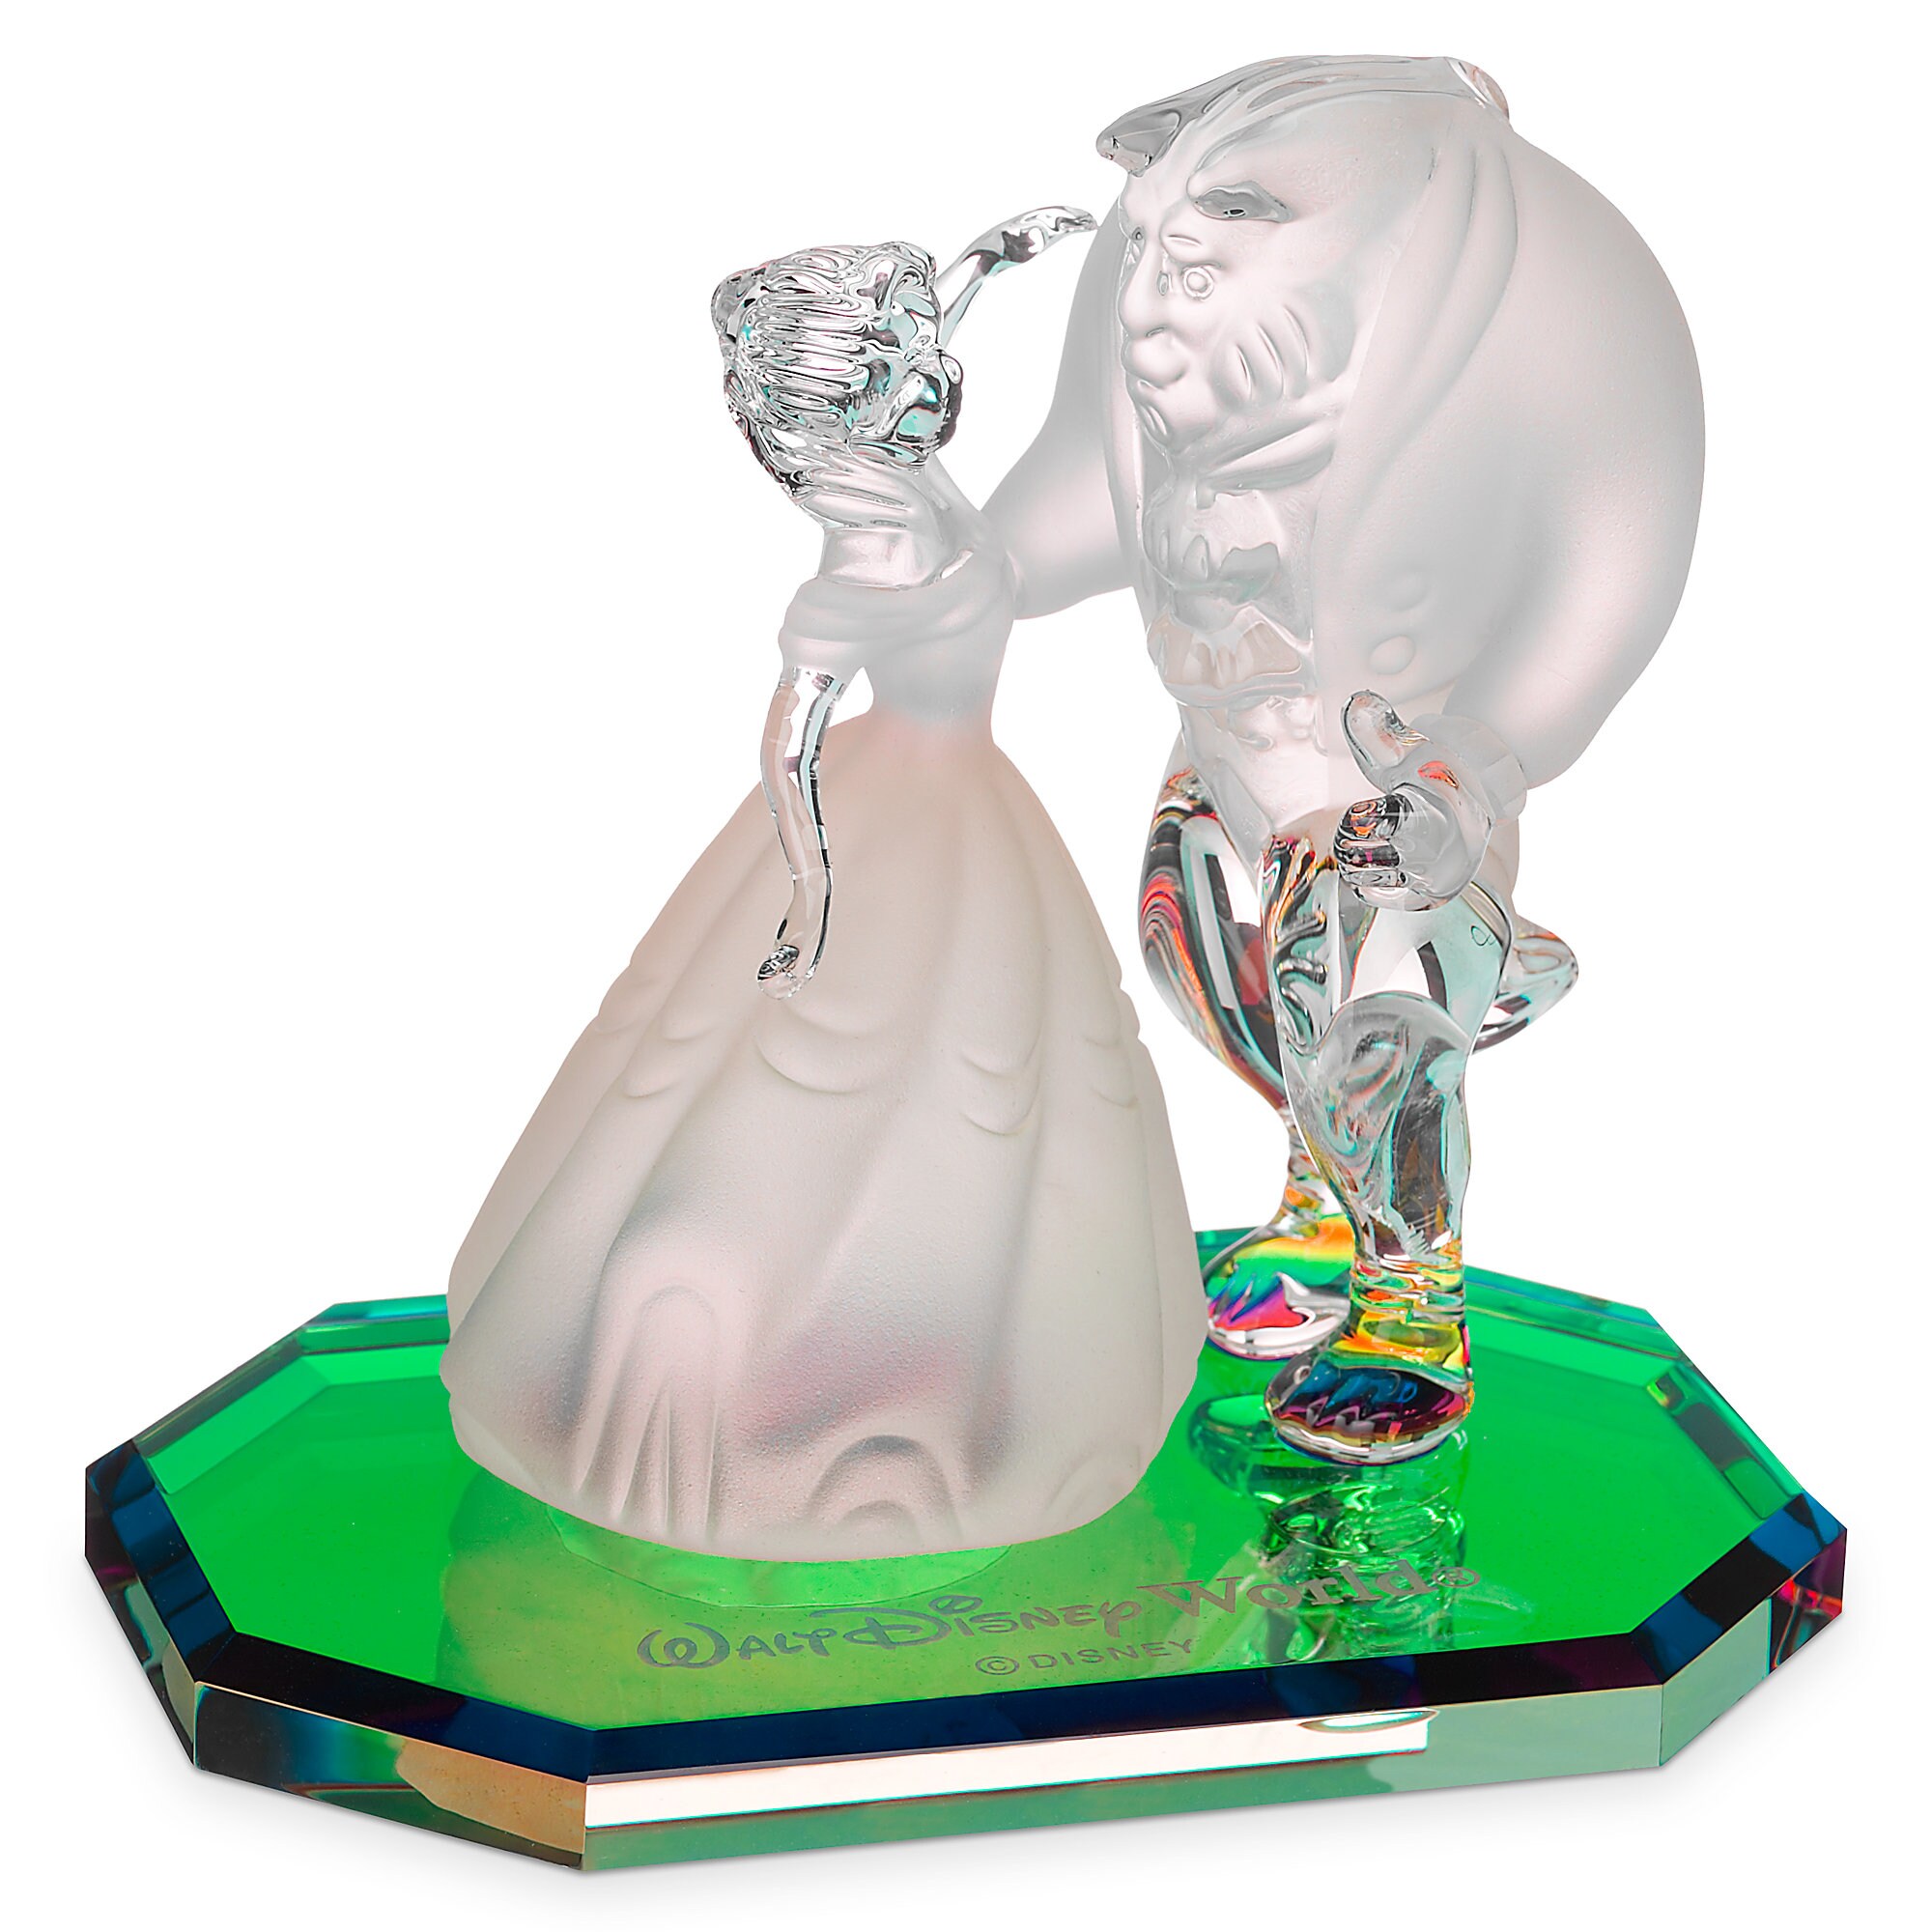 Beauty and the Beast Figurine by Arribas - Walt Disney World